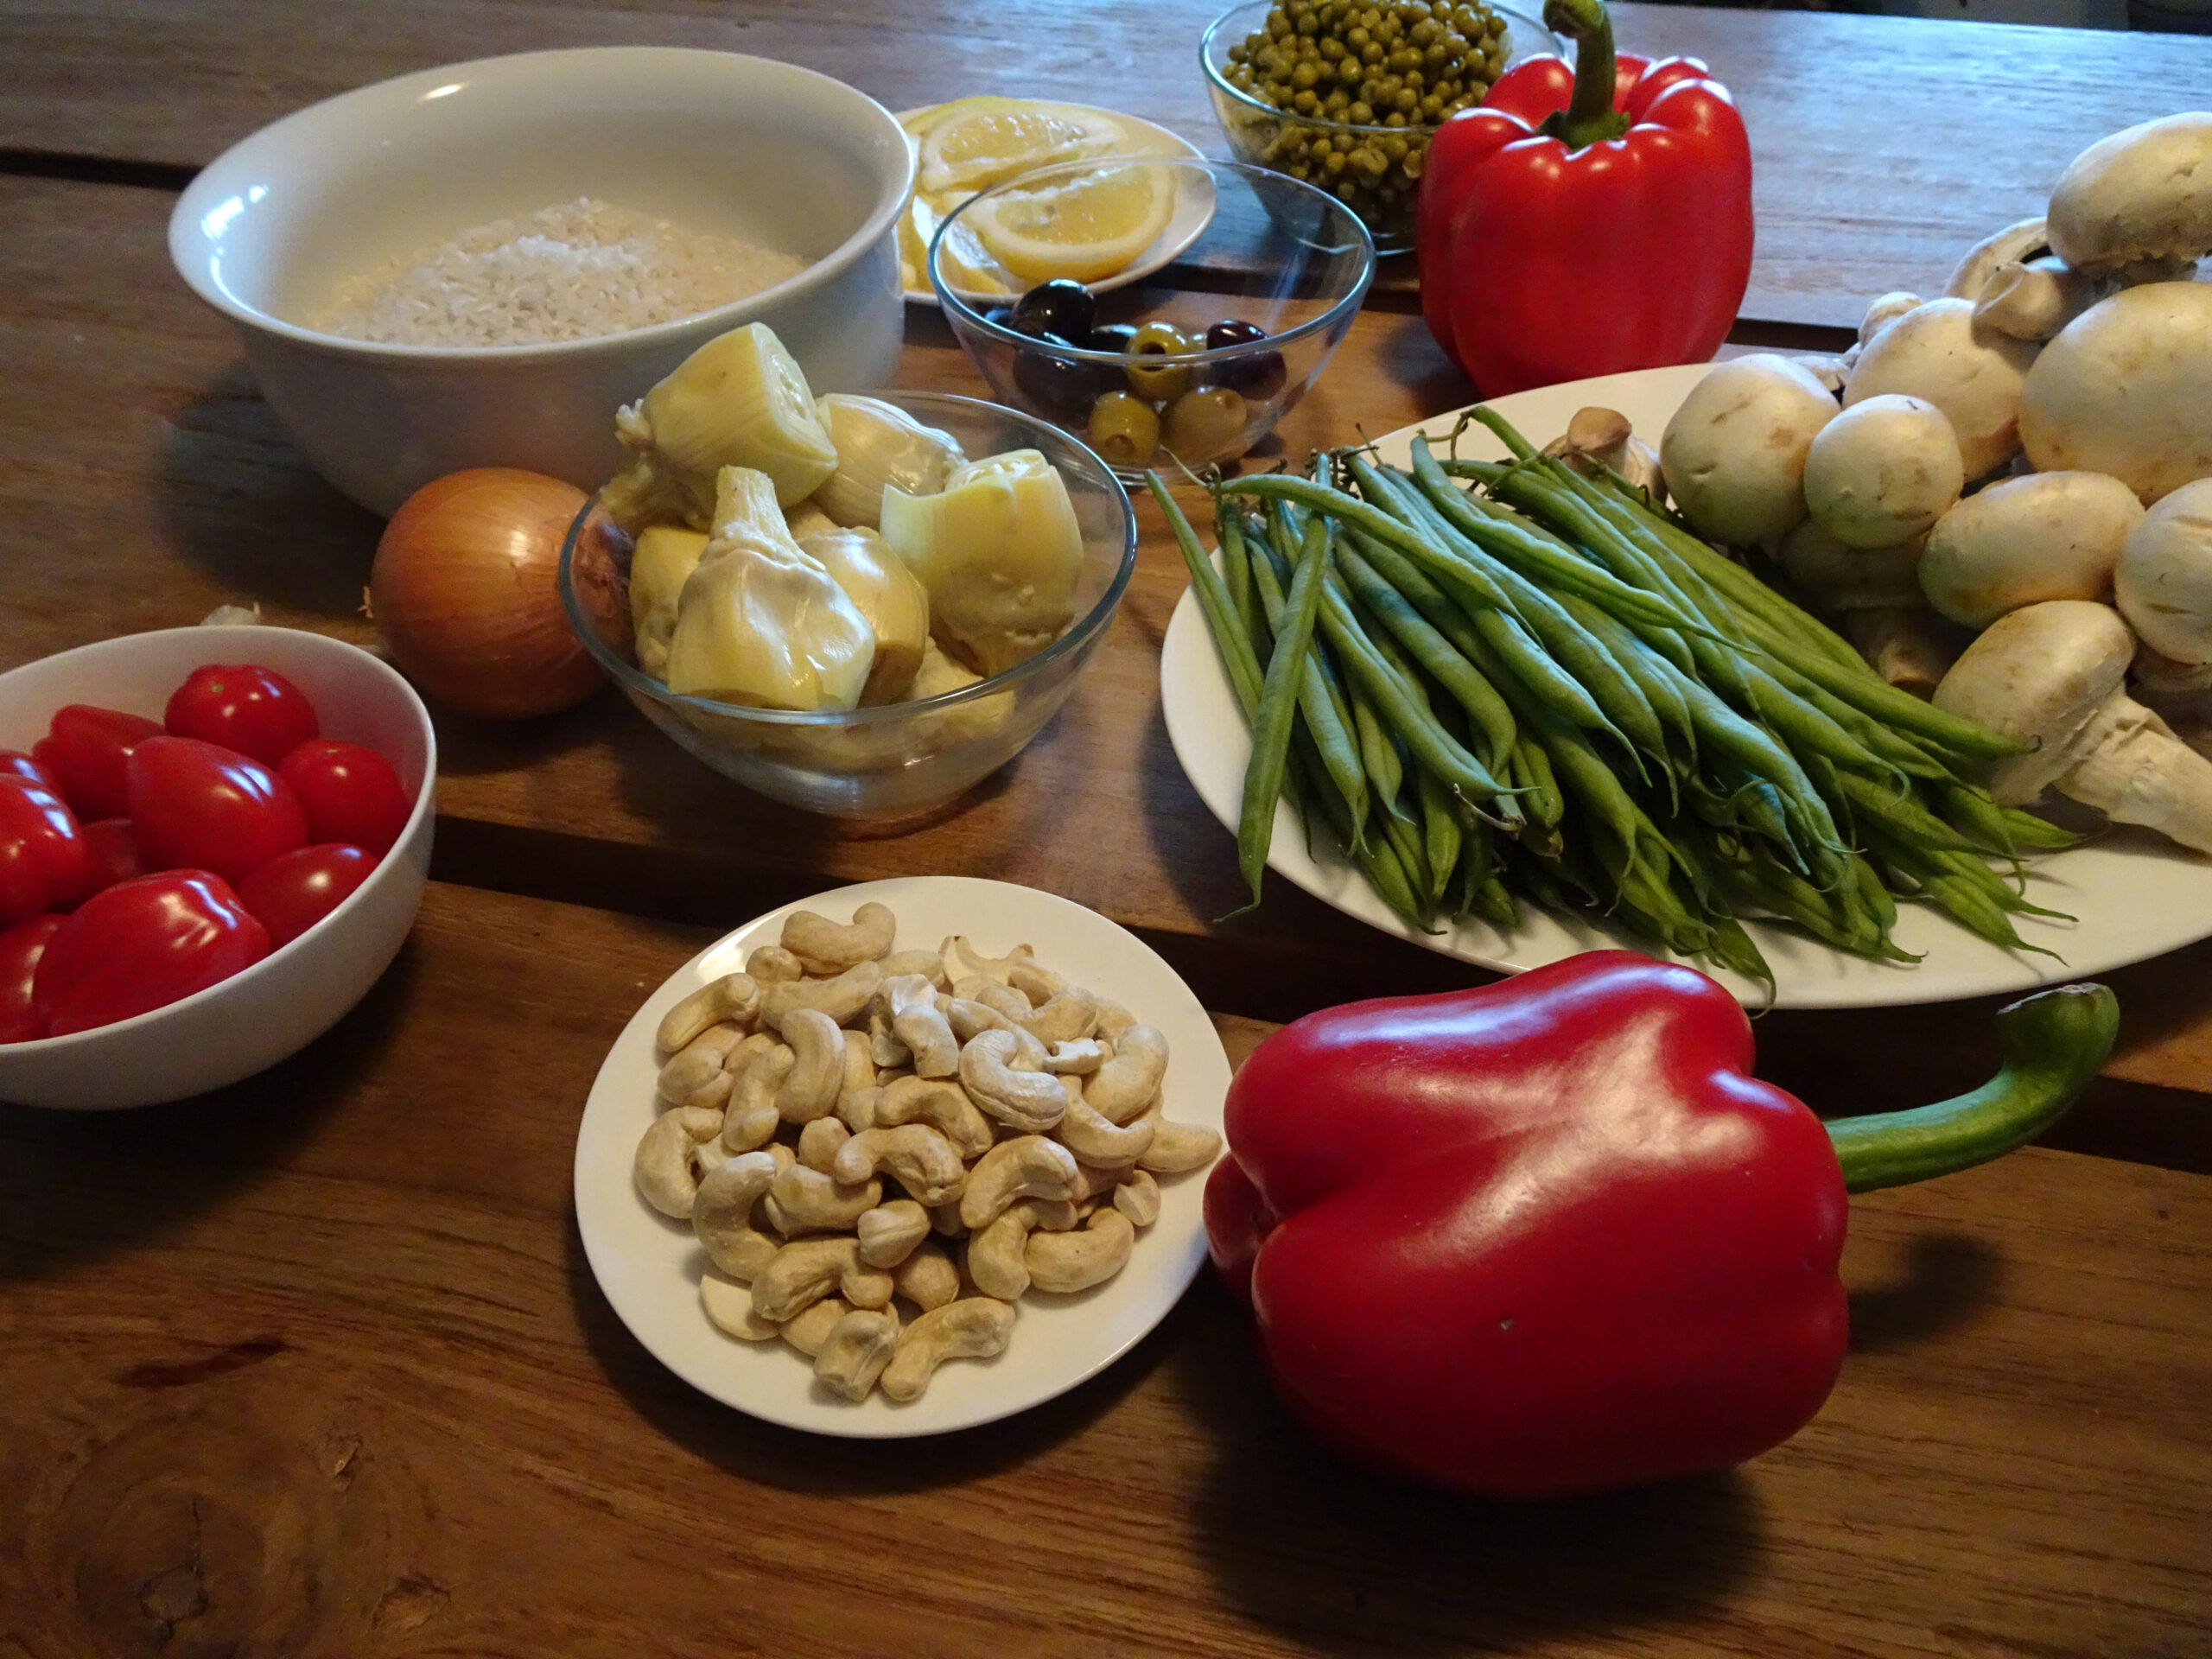 Ingredients paella